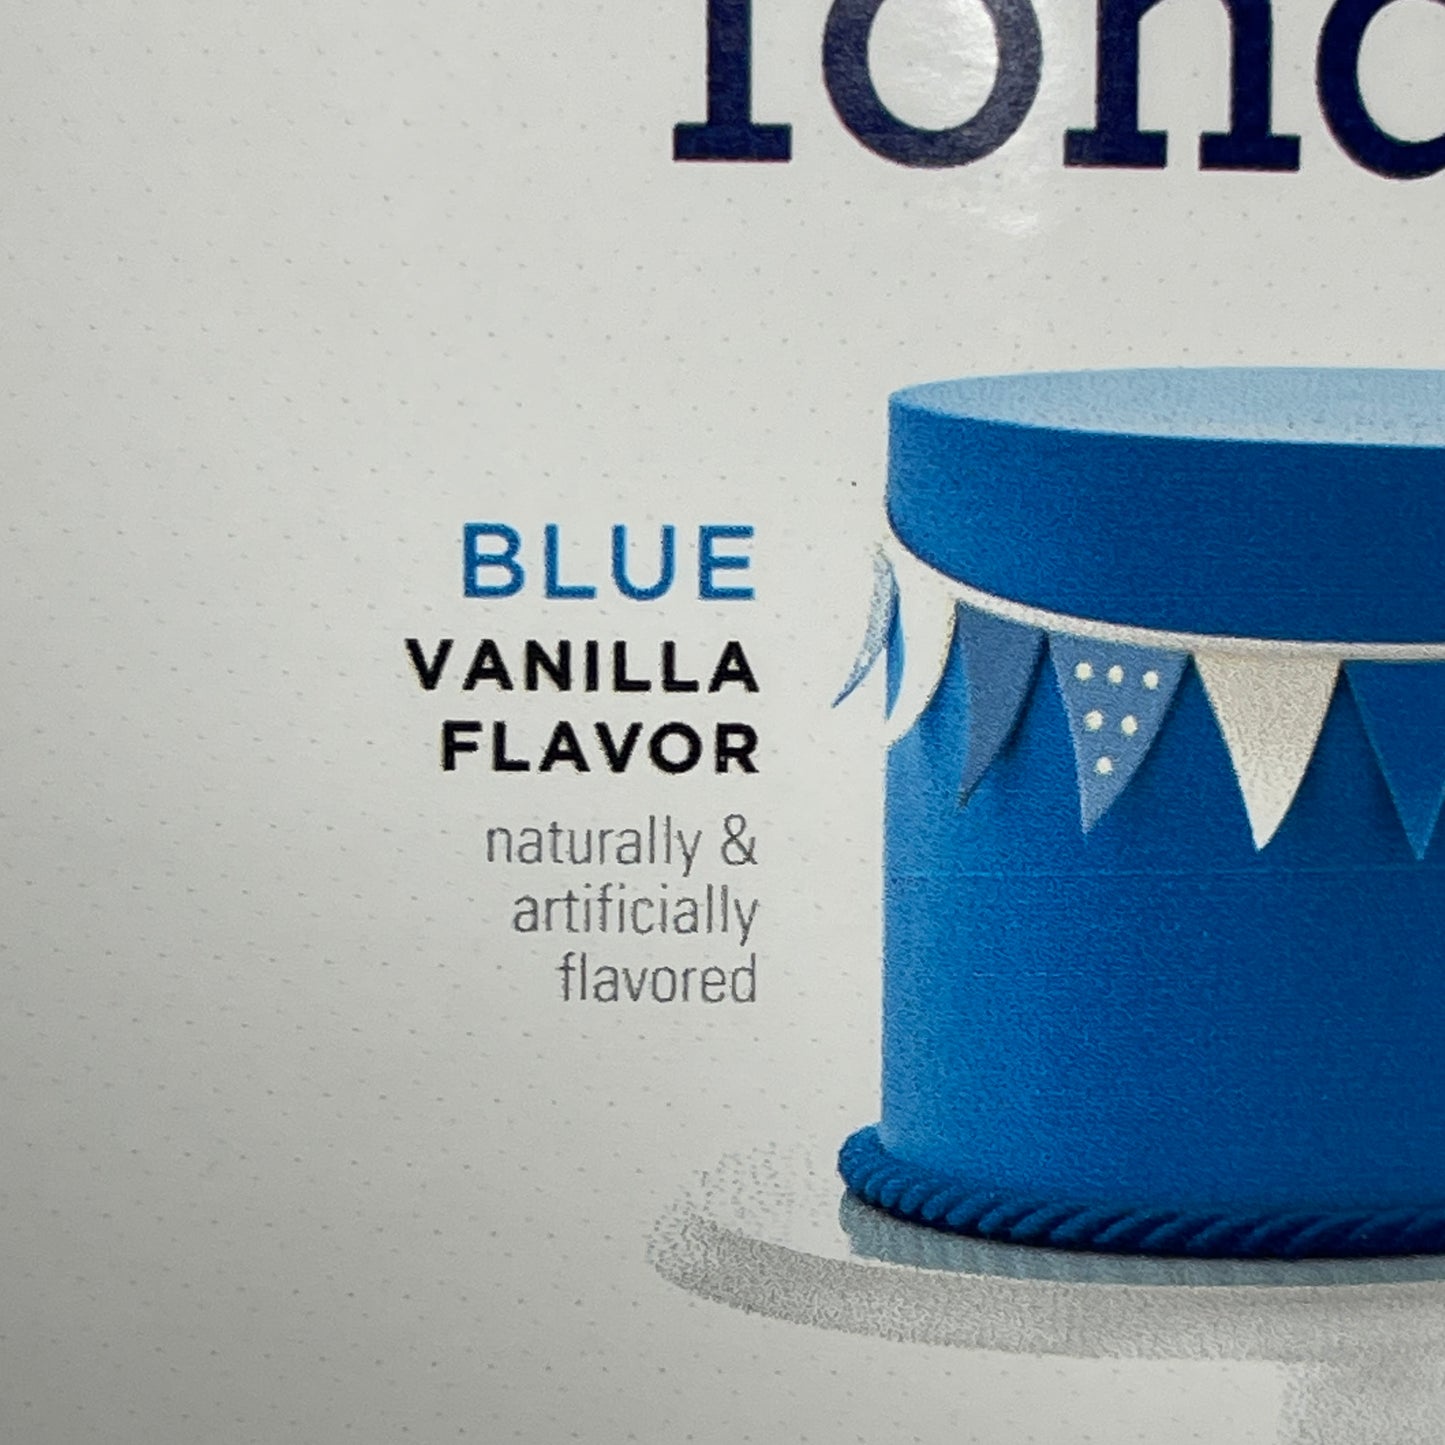 SATIN FINE FOODS Satin Ice Fondant Blue Vanilla 5 lb Pail (12/24)